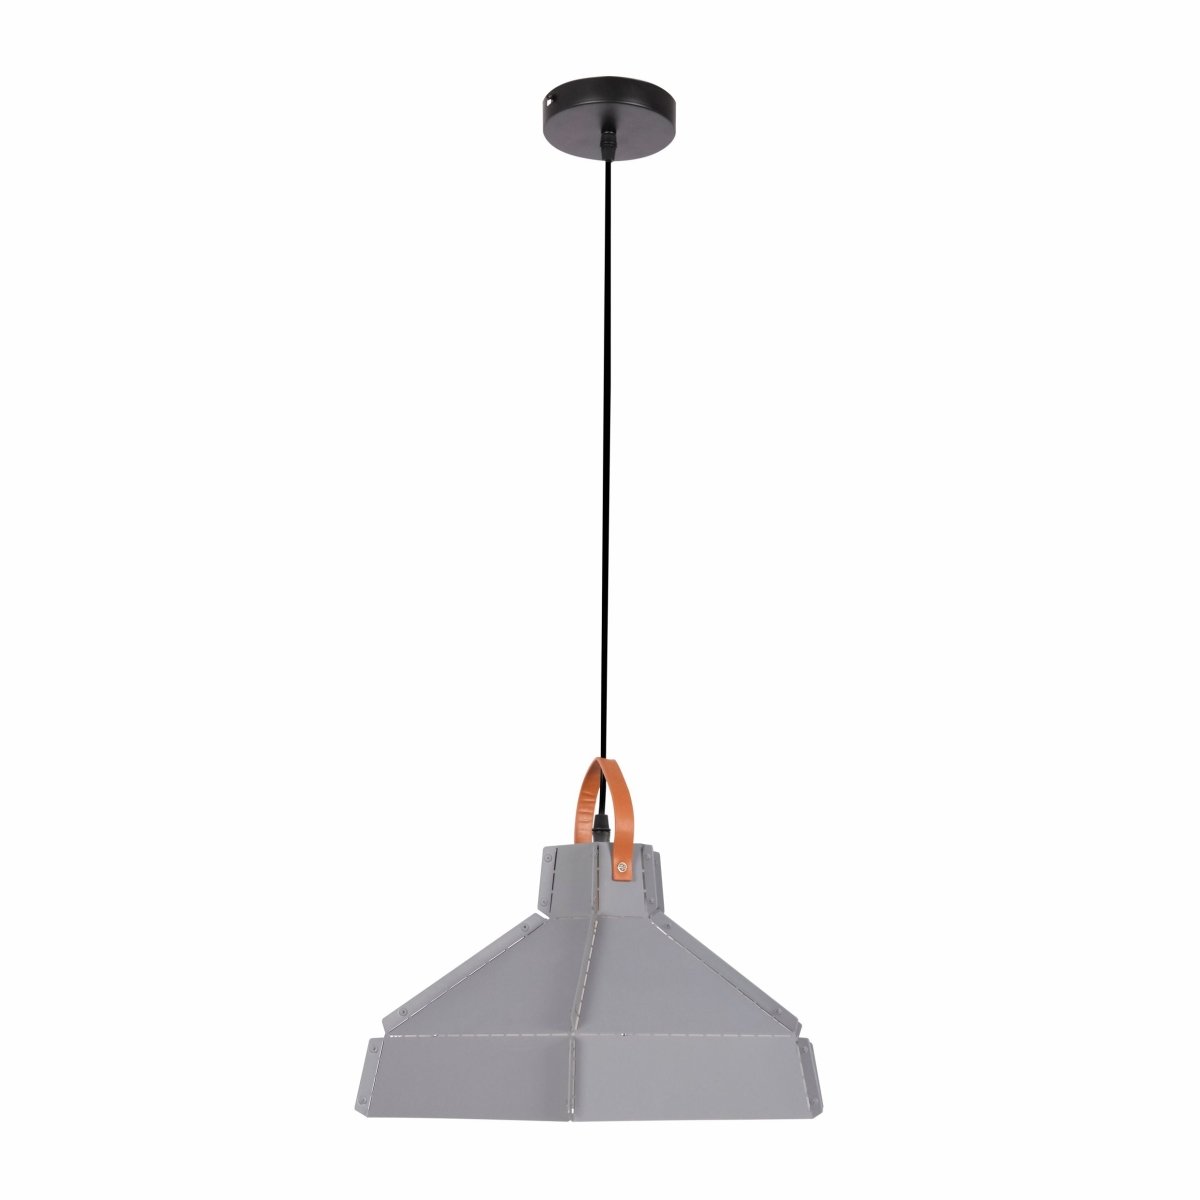 Main image of Esagono Maxi Grey Metal Pendant Light with E27 Fitting | TEKLED 159-17356